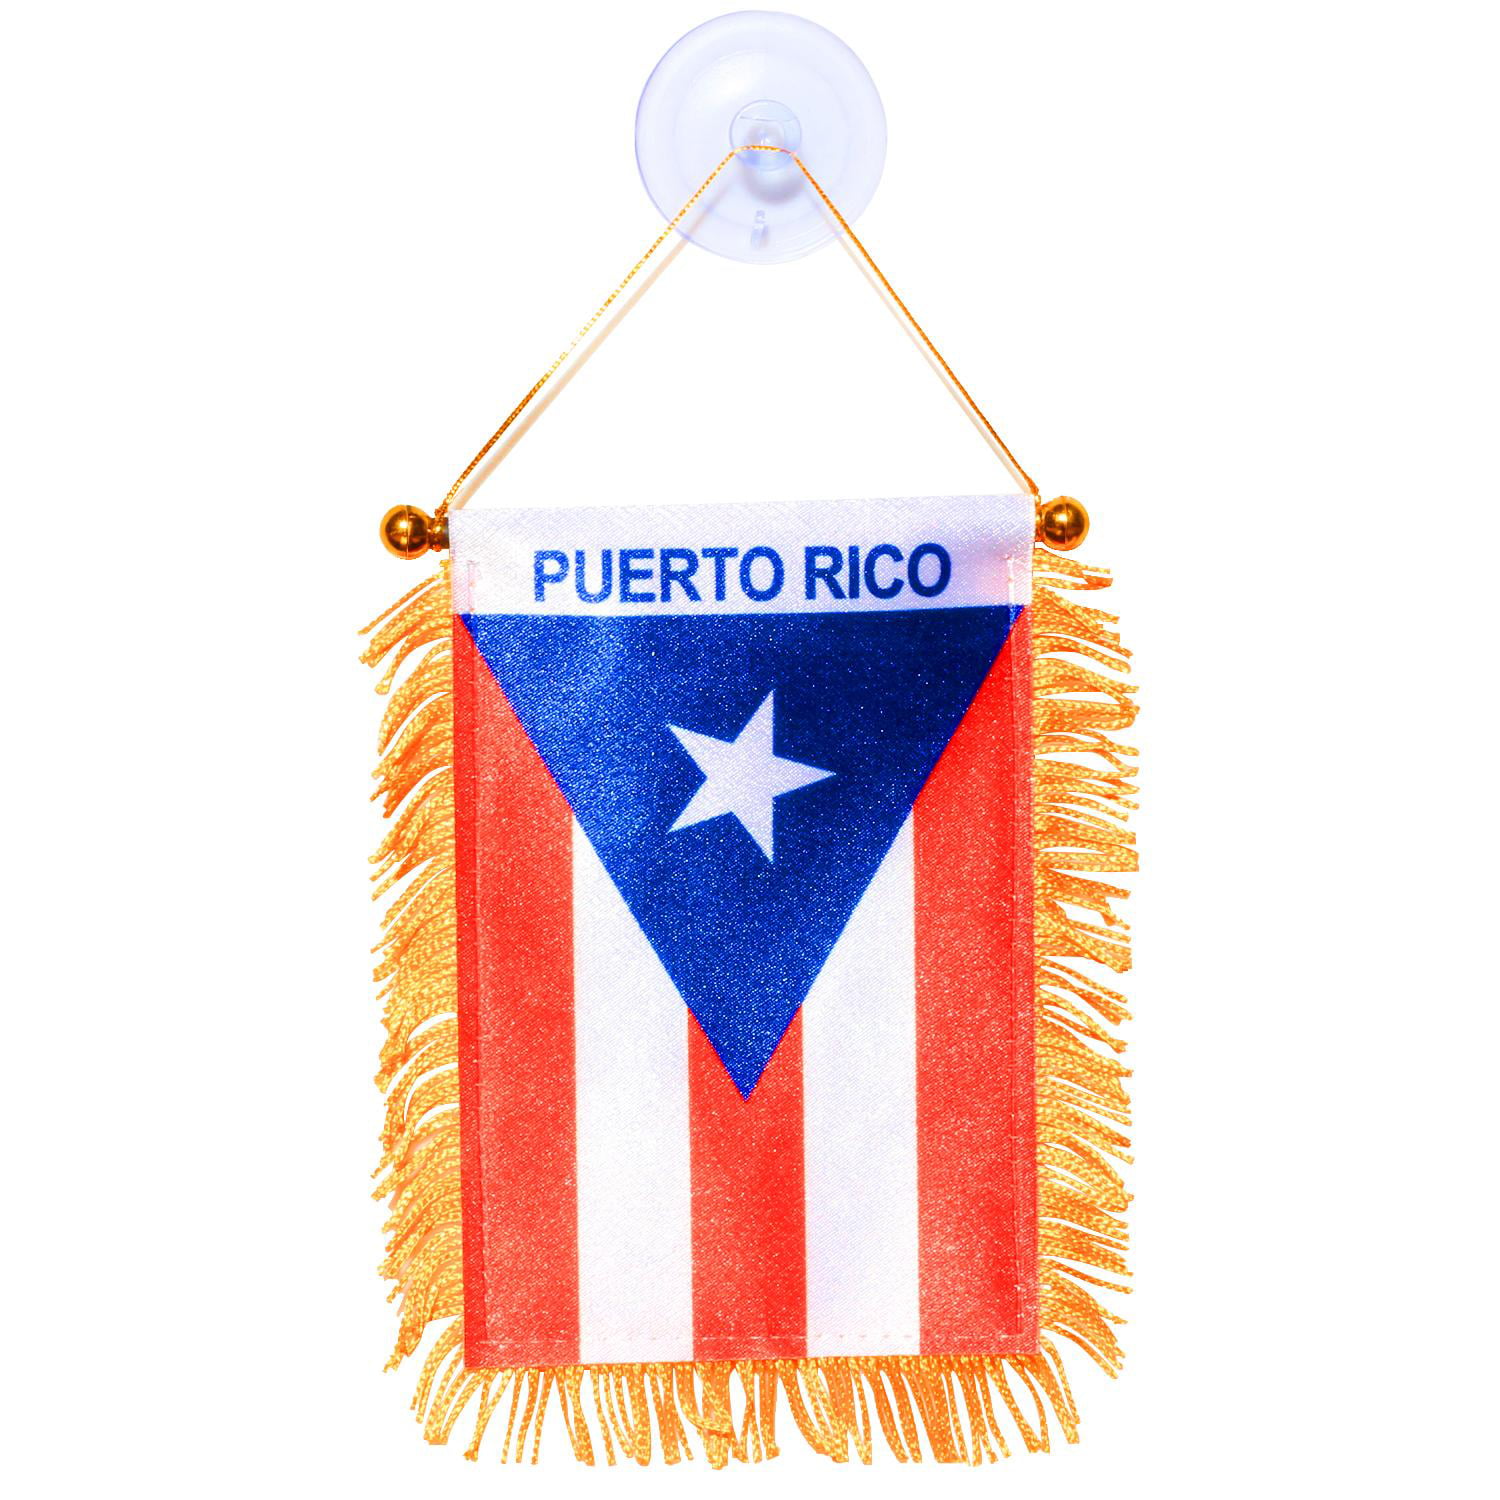 Puerto Rico Rican flag mini banner & Boxing golves Rear view mirror 2pcs 